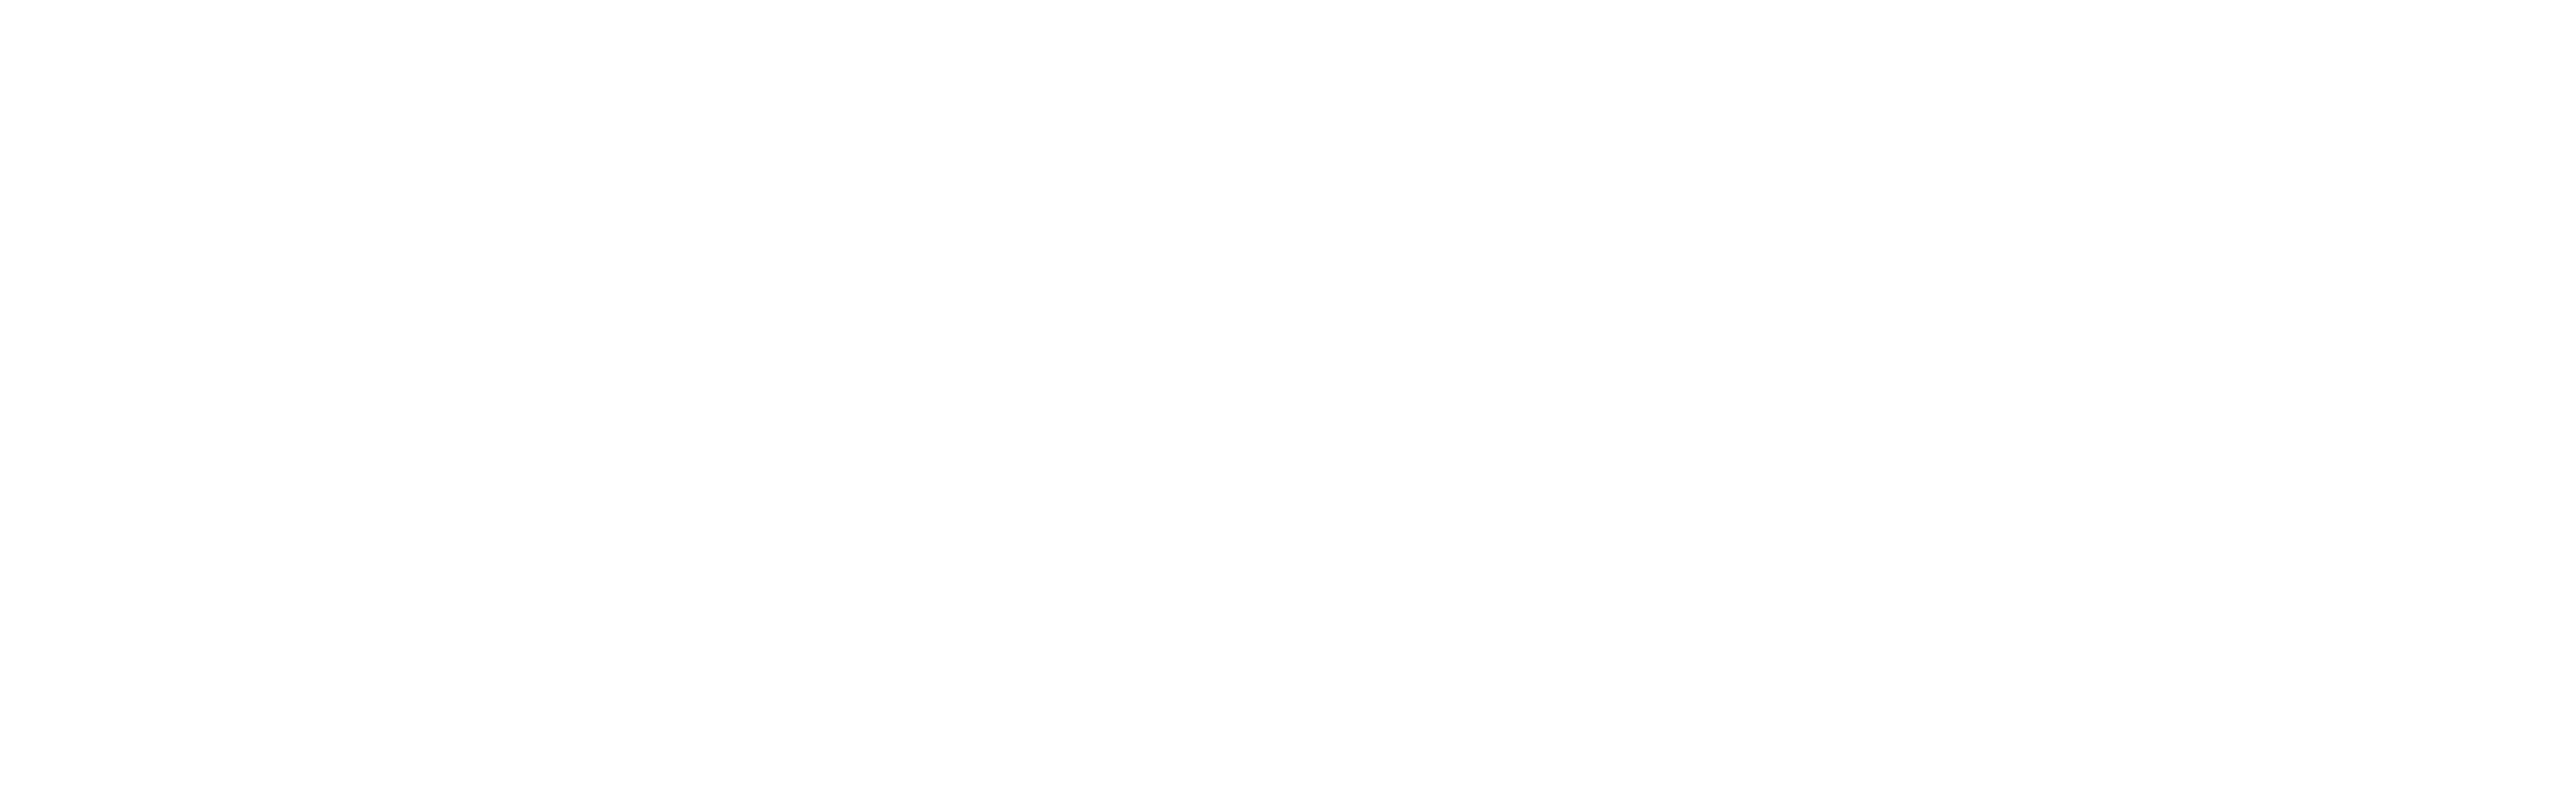 Lynchpin Broadcast-Slogan Block-No LLC-WHITE CROPPED